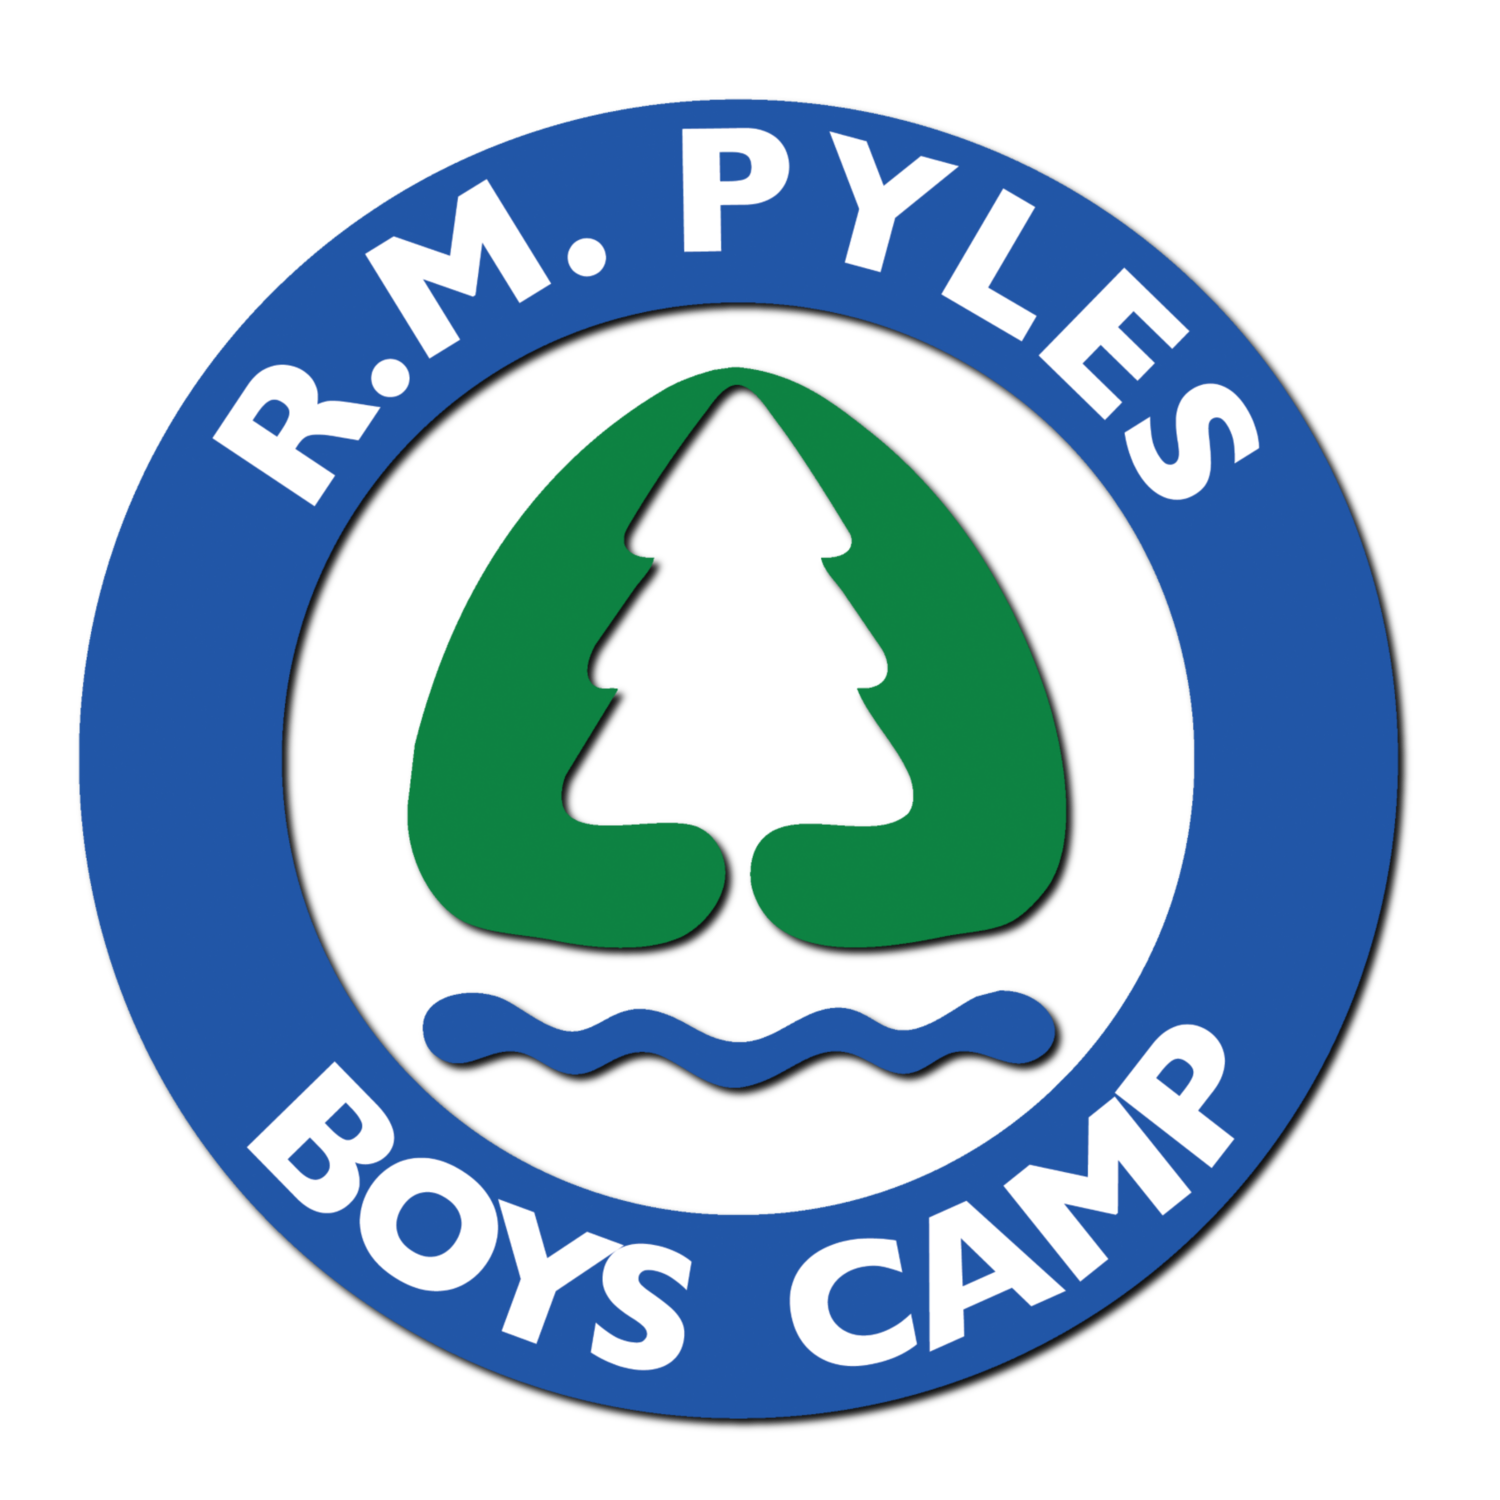 Pyles Boys Camp